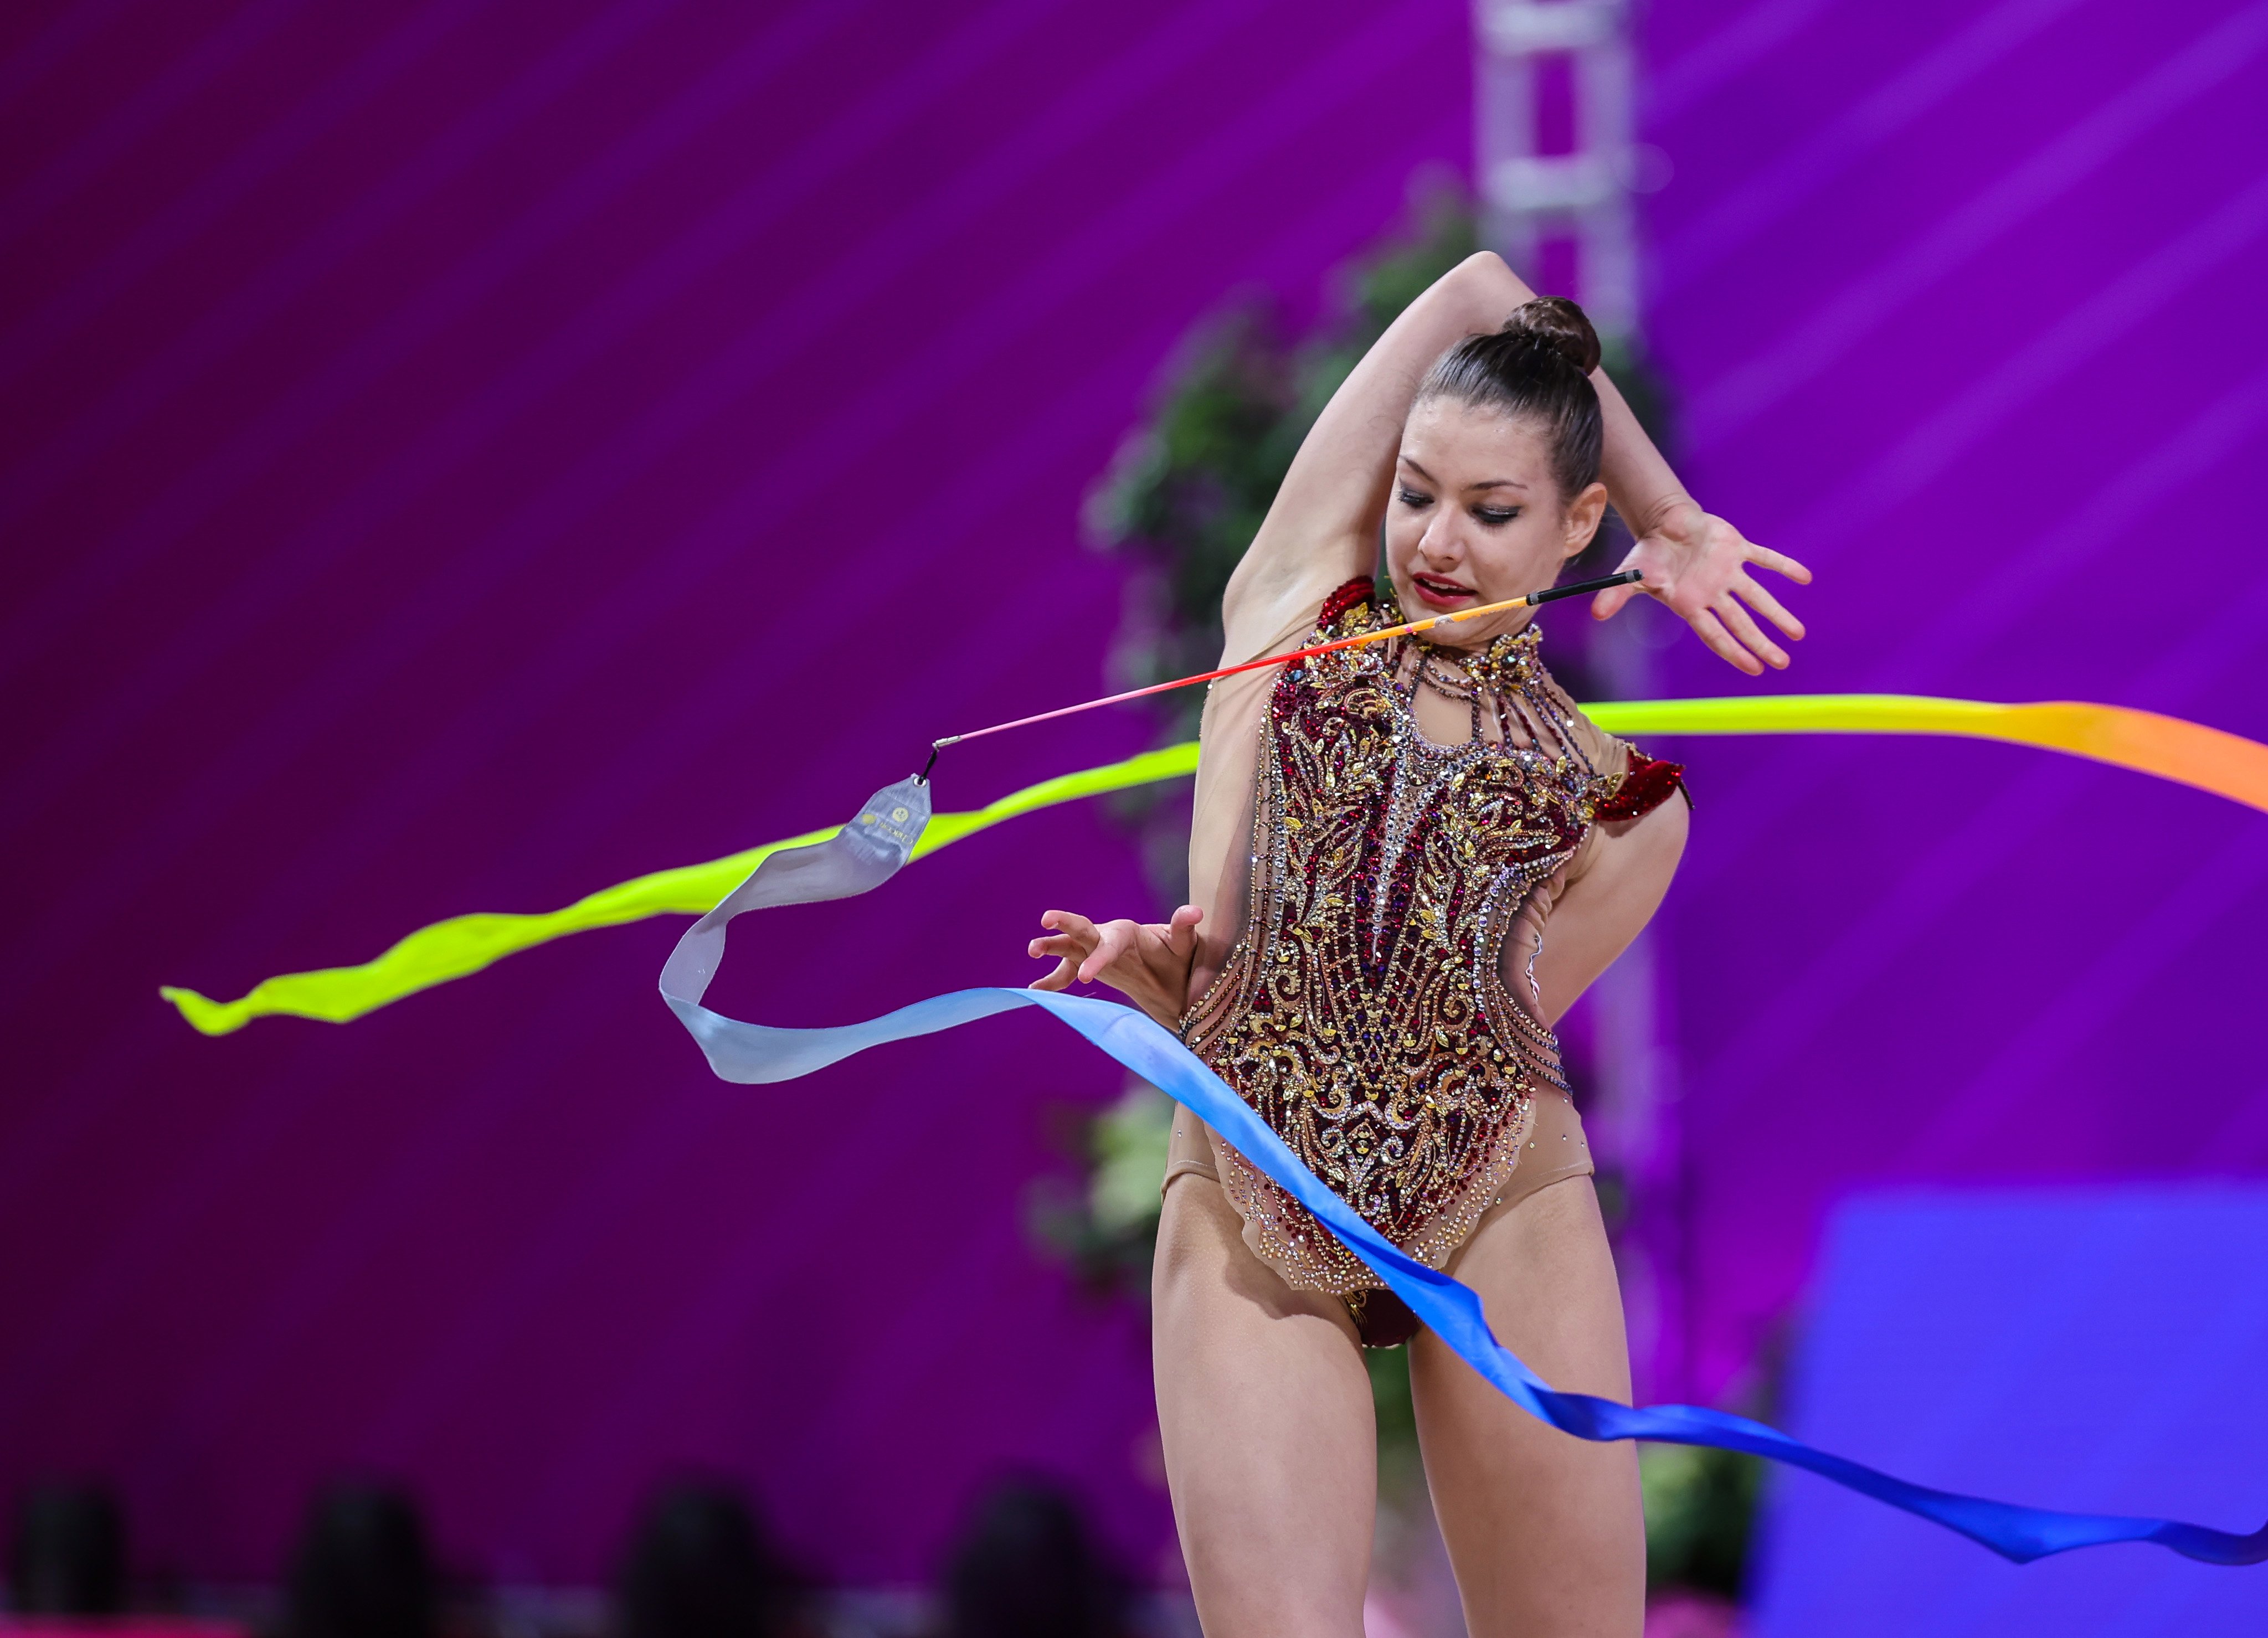 When is Rhythmic Gymnastics? Watch Locals Laura Zeng and Evita Griskenas Compete